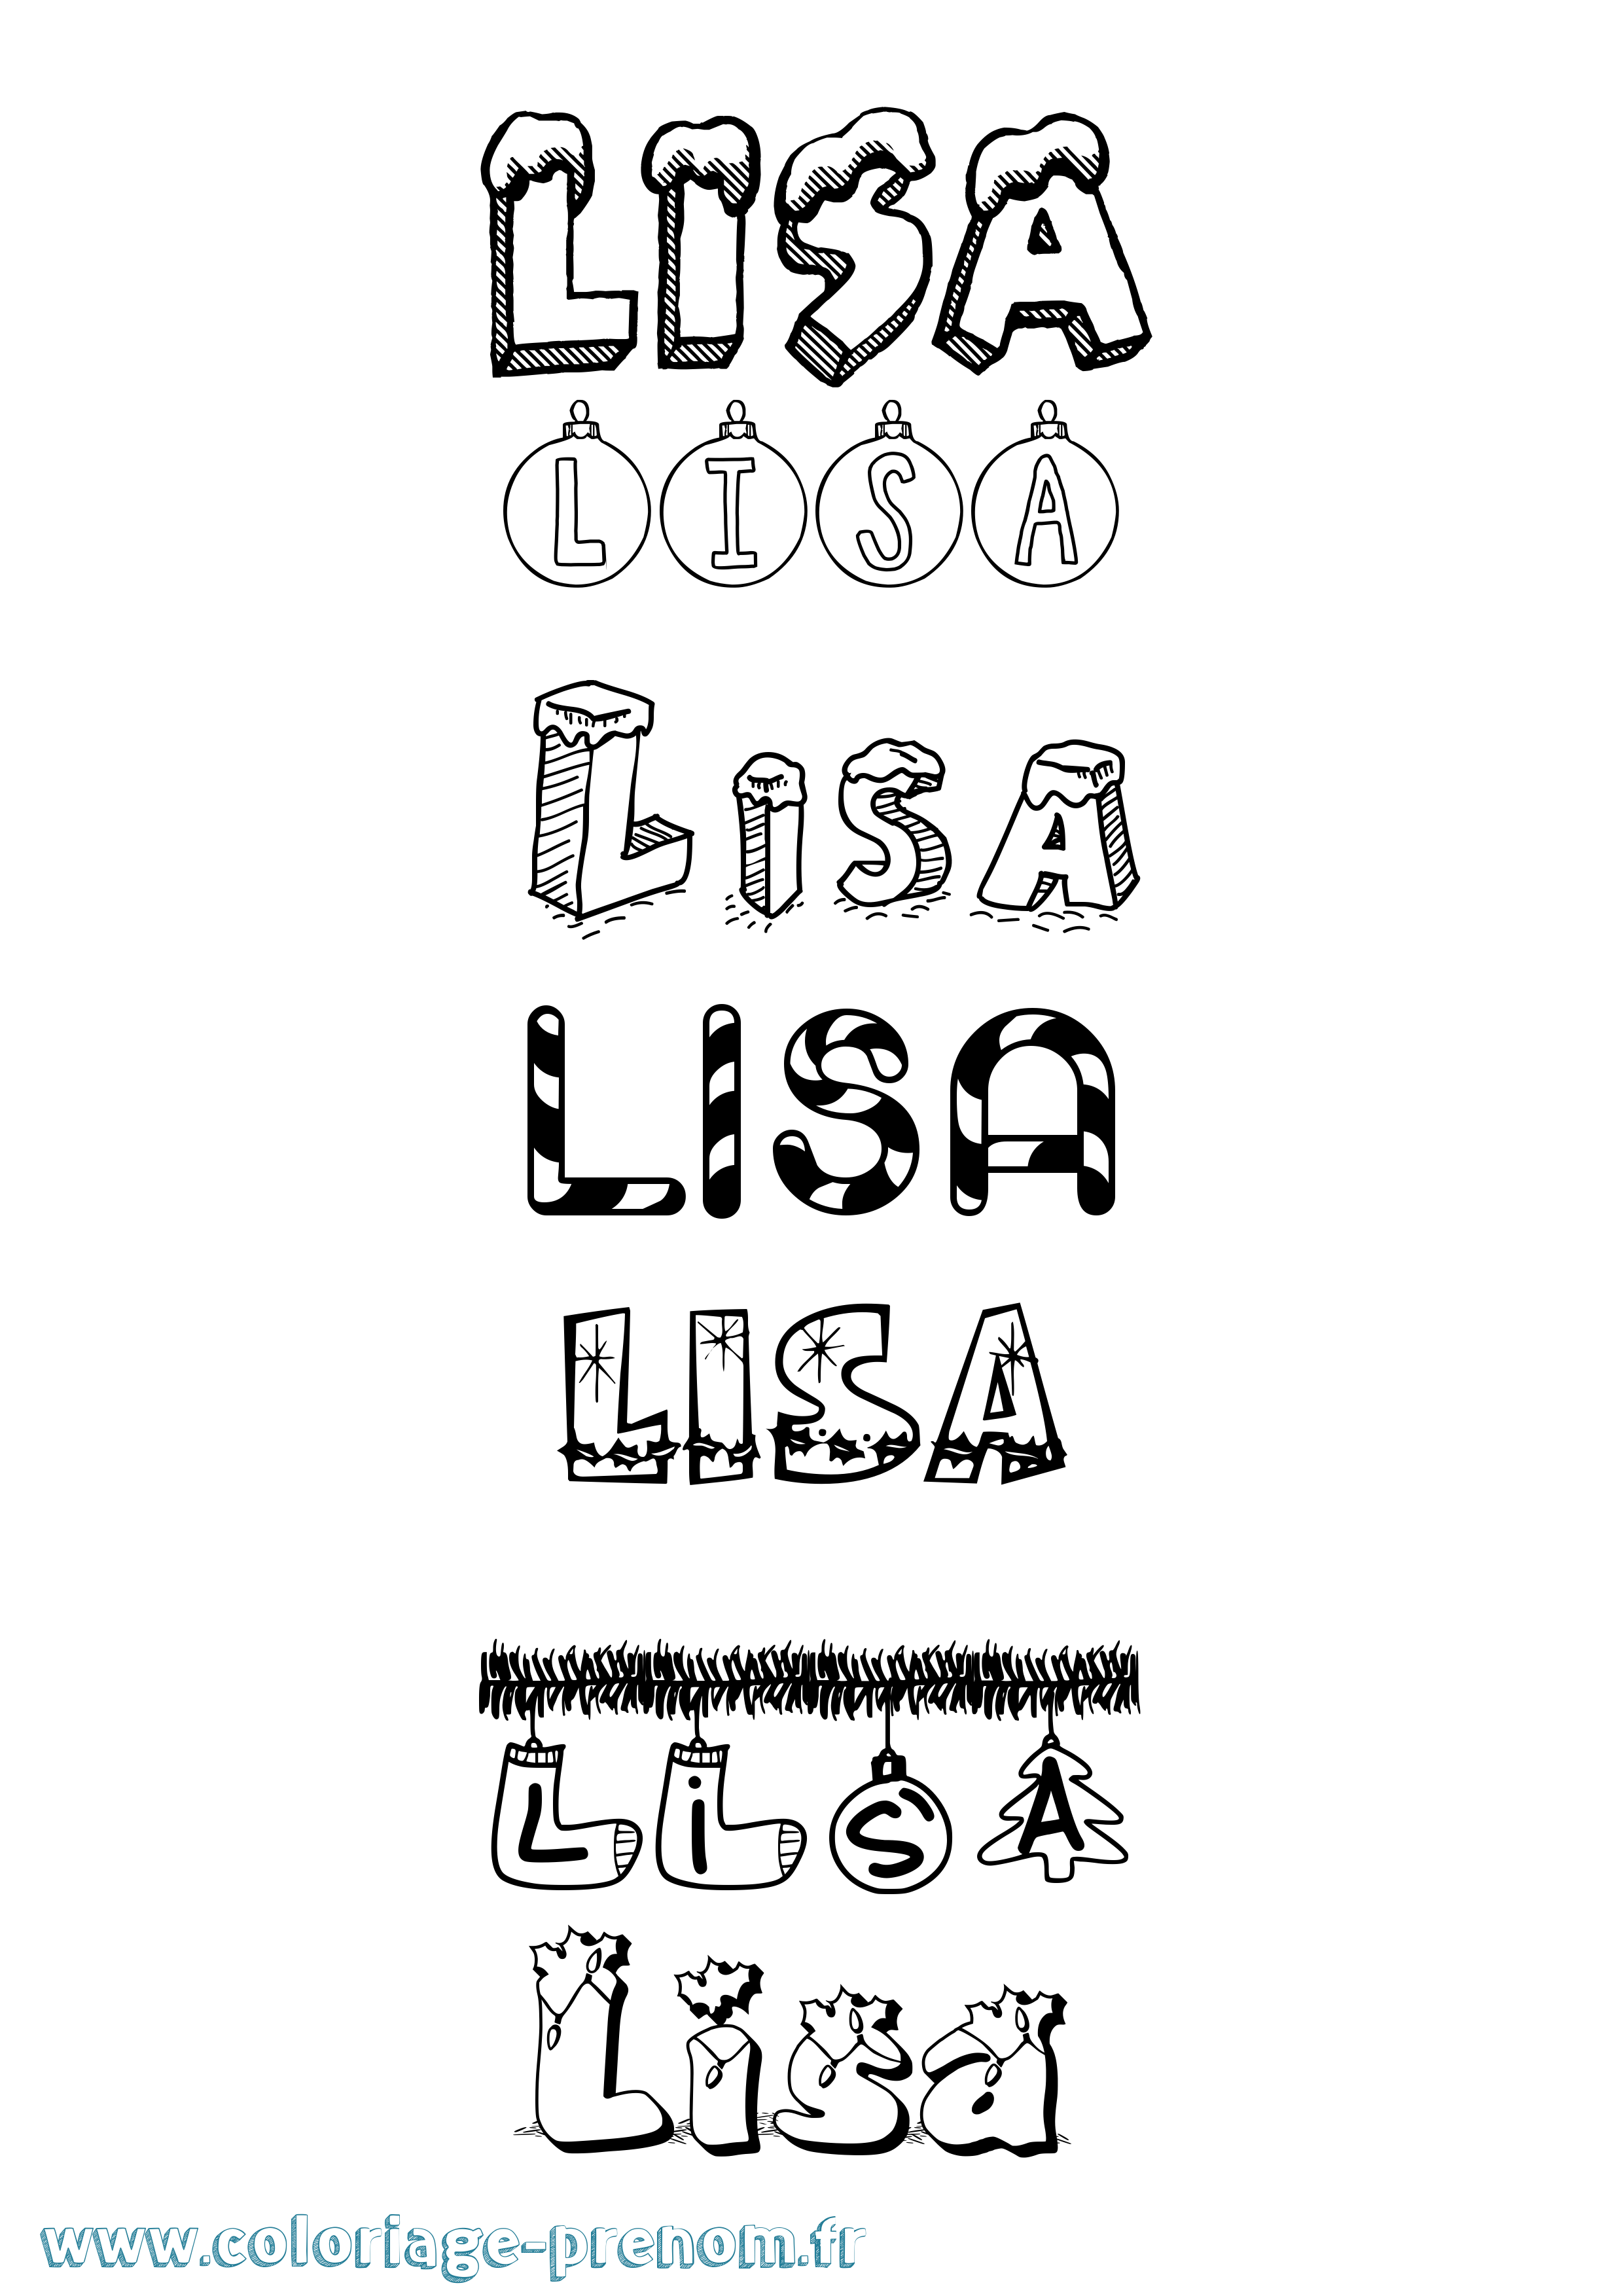 Coloriage prénom Lisa